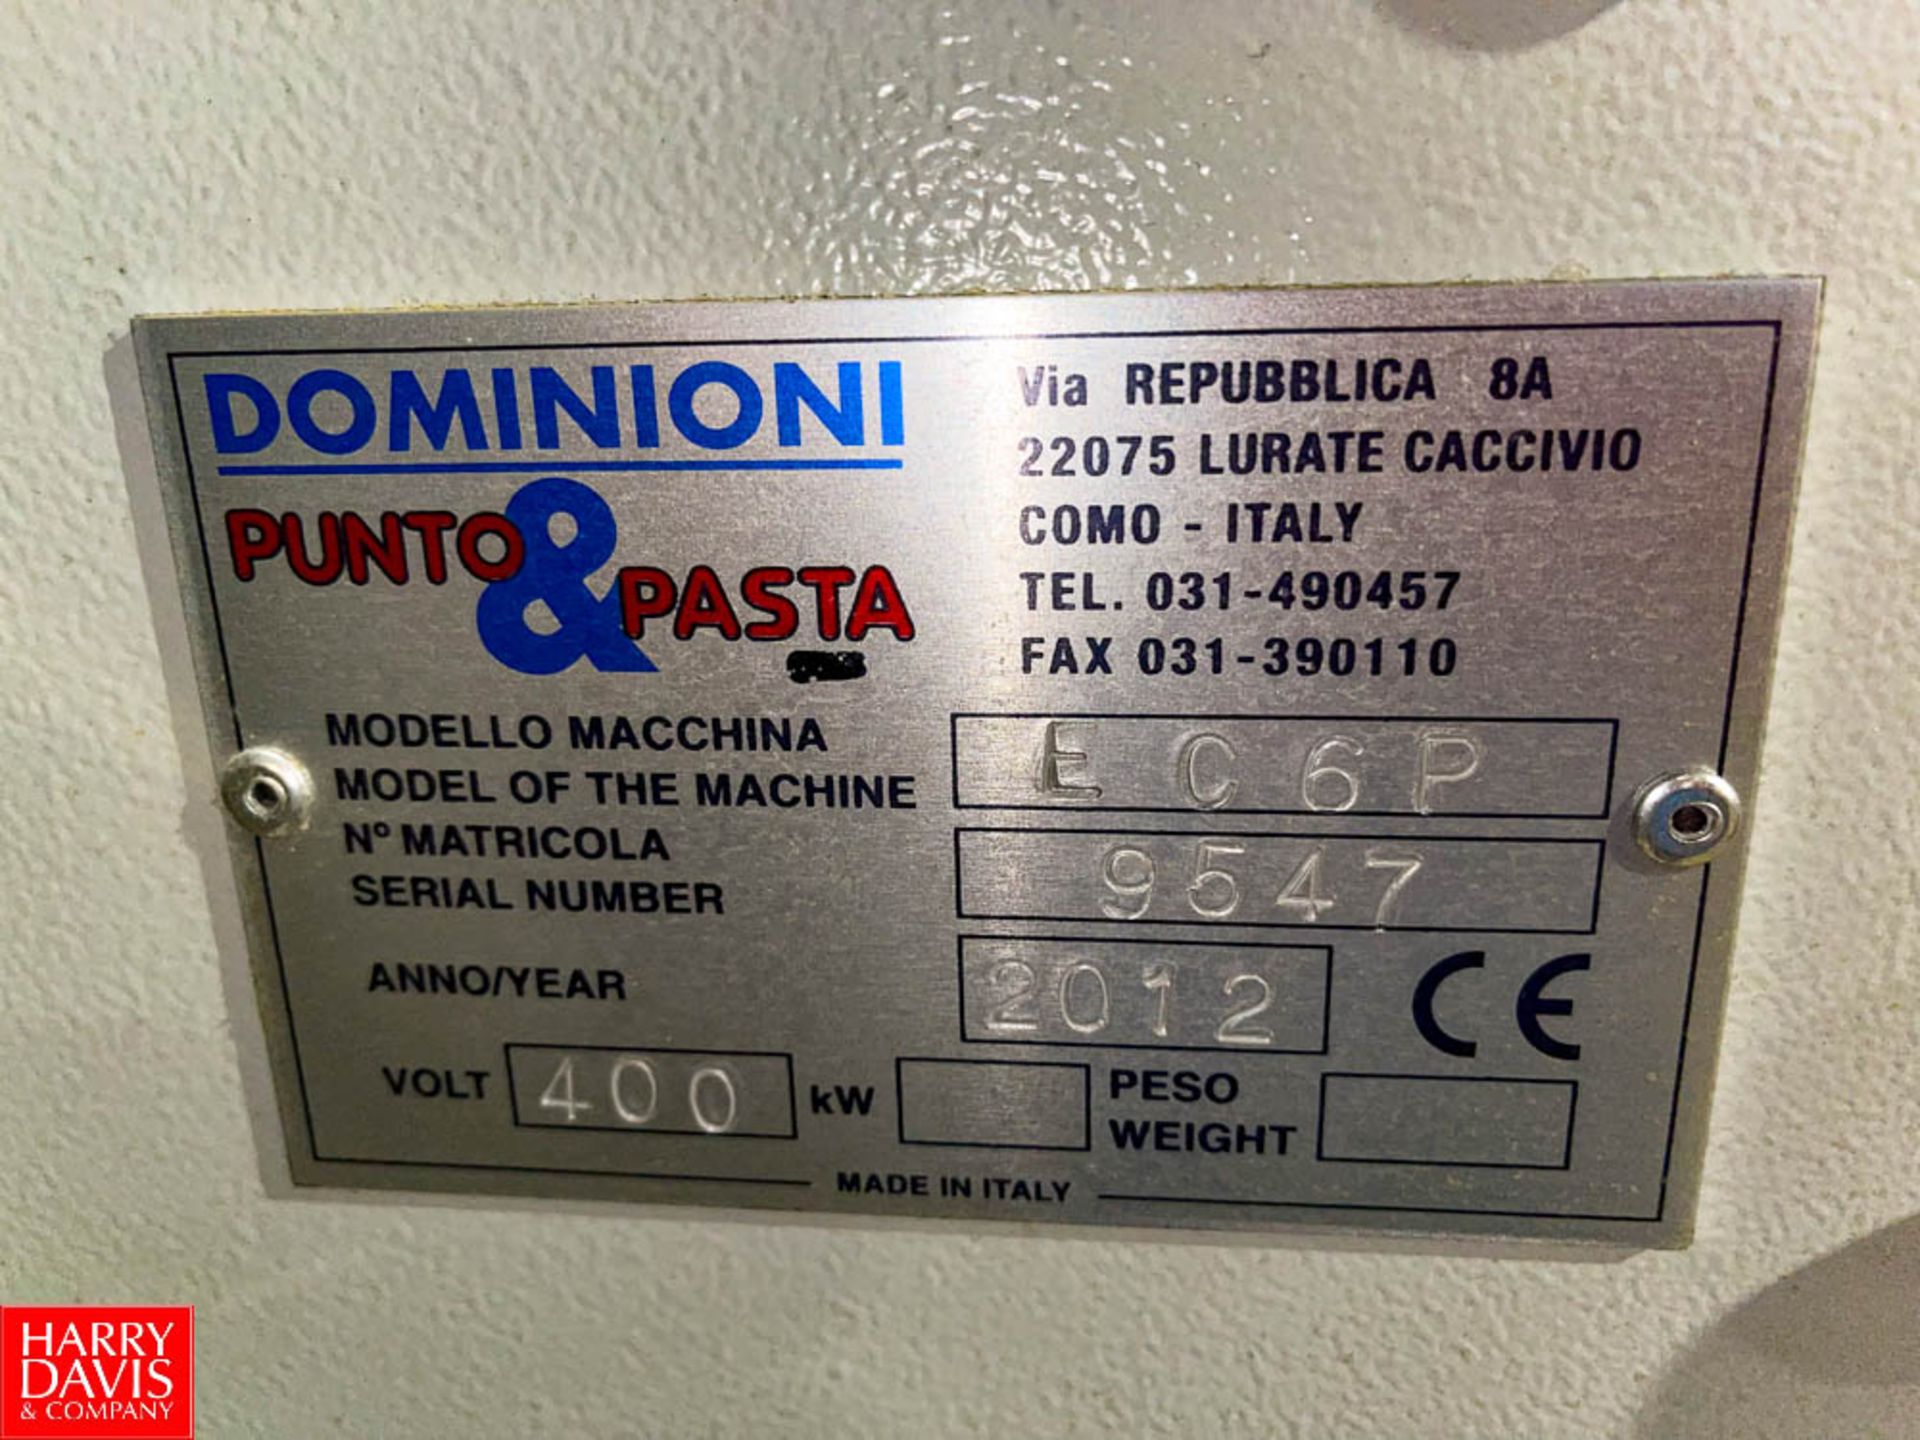 2012 Dominioni Pinto; Pasta S/S Dryer Model: EC69, S/N: 9547, With 38" Wide Belt, Allen Bradley - Image 6 of 7